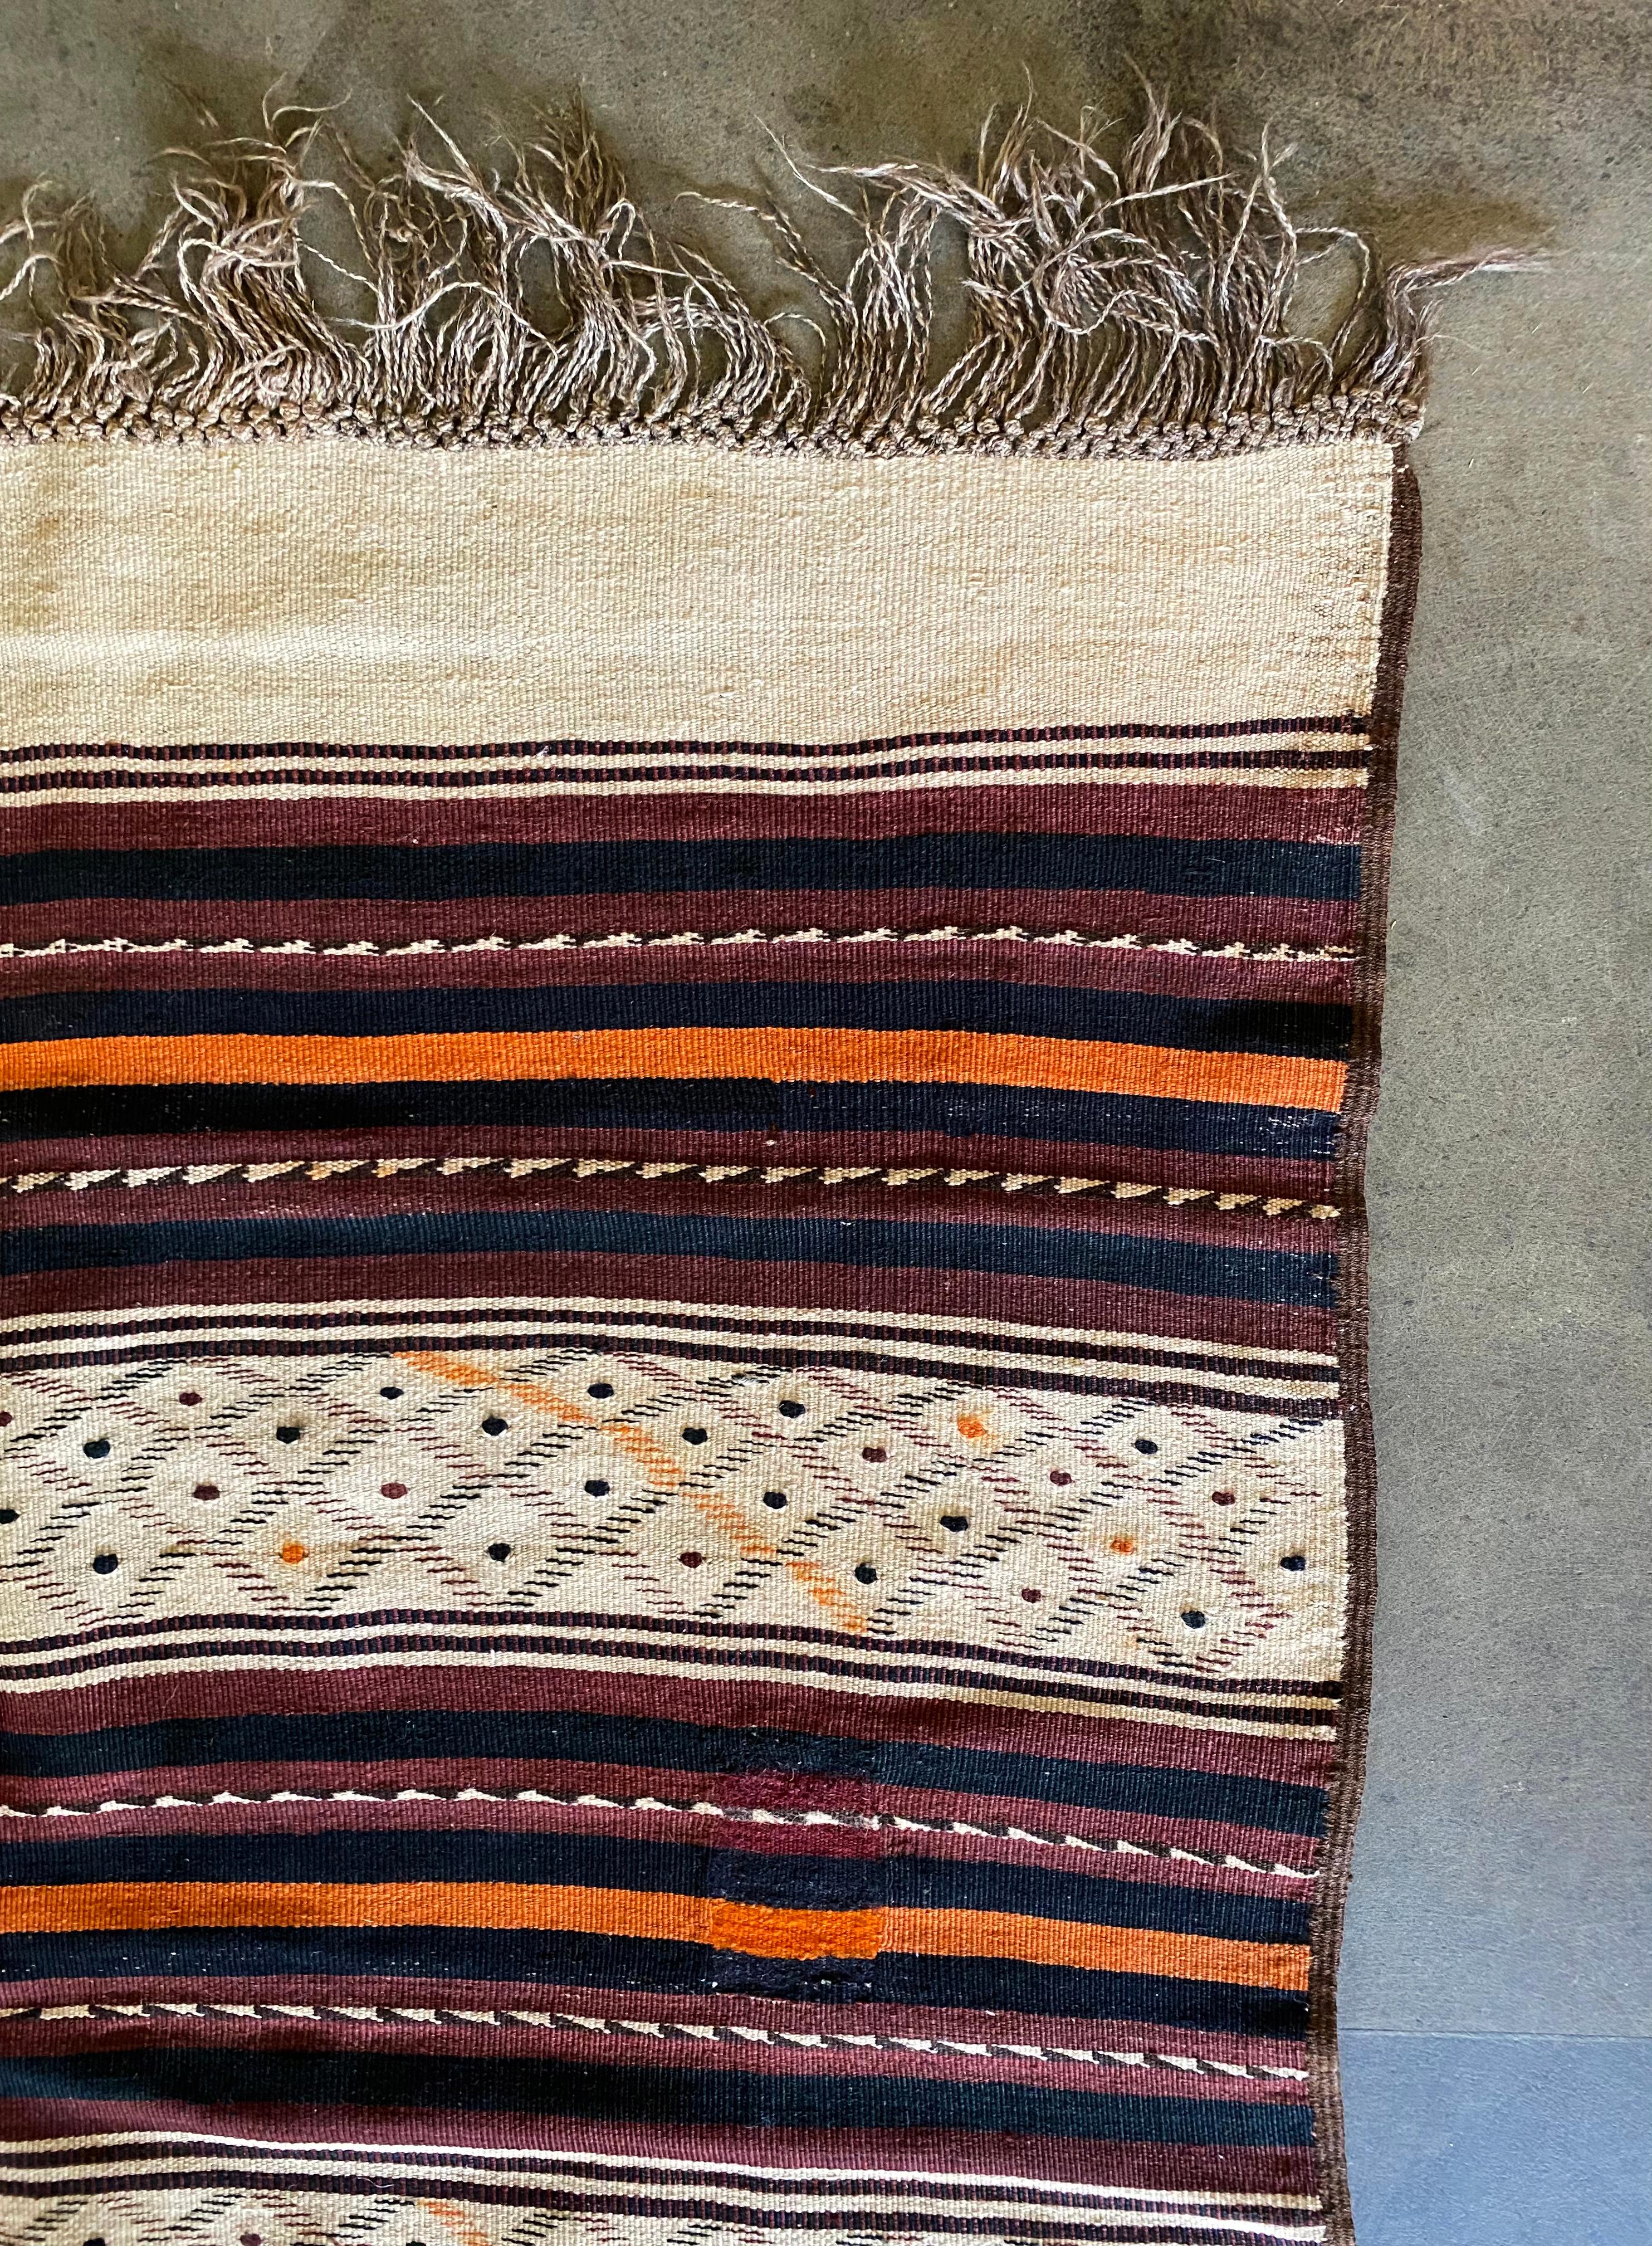 Uzbekistan Tartari Safid Kilim Rug from Wool, Early 20th Century For Sale 2